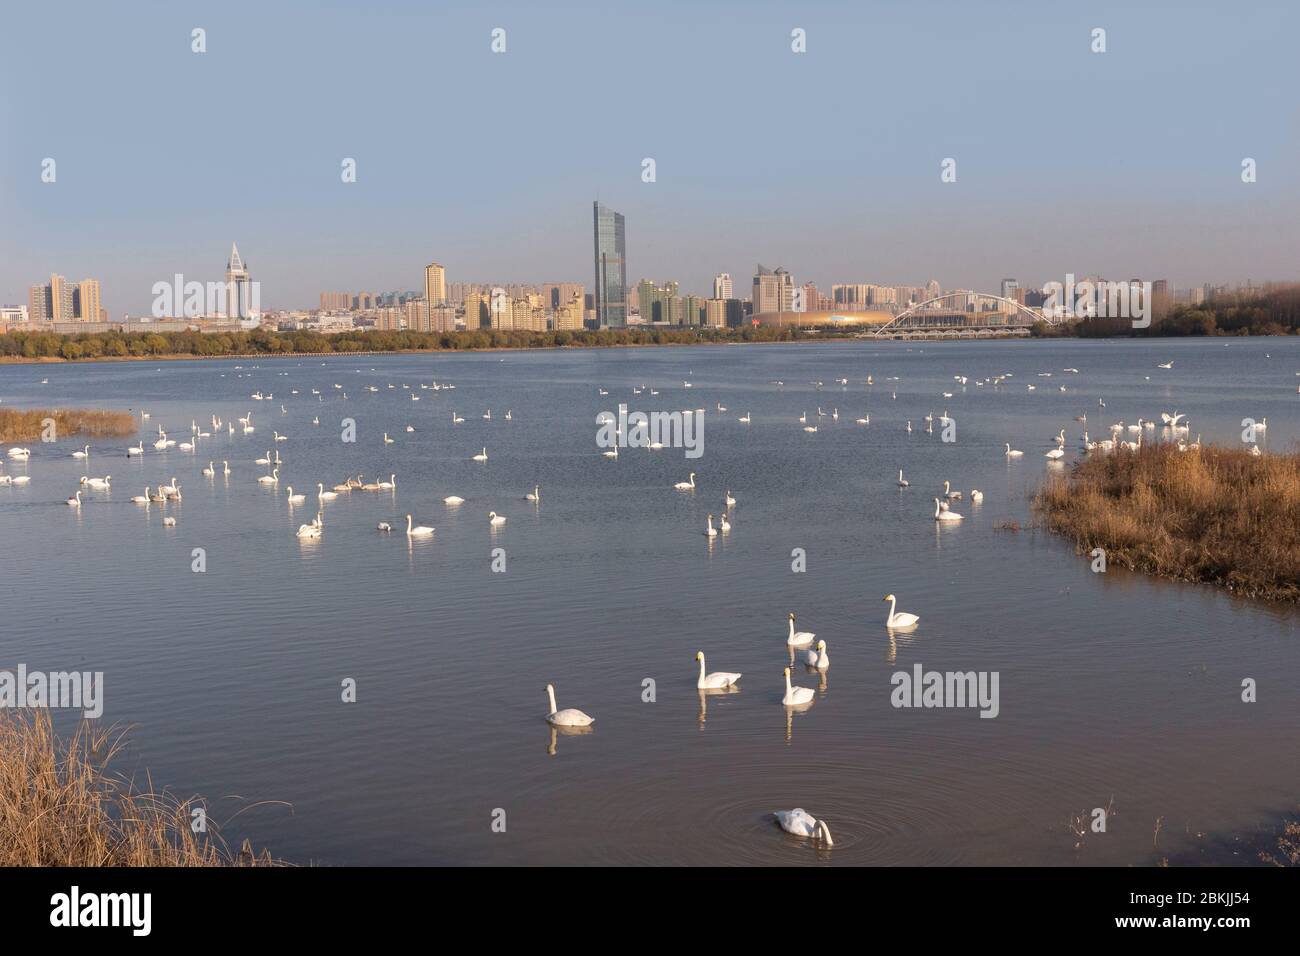 China, Henan ptovince, Sanmenxia, Whooper swan (Cygnus cygnus), Stock Photo